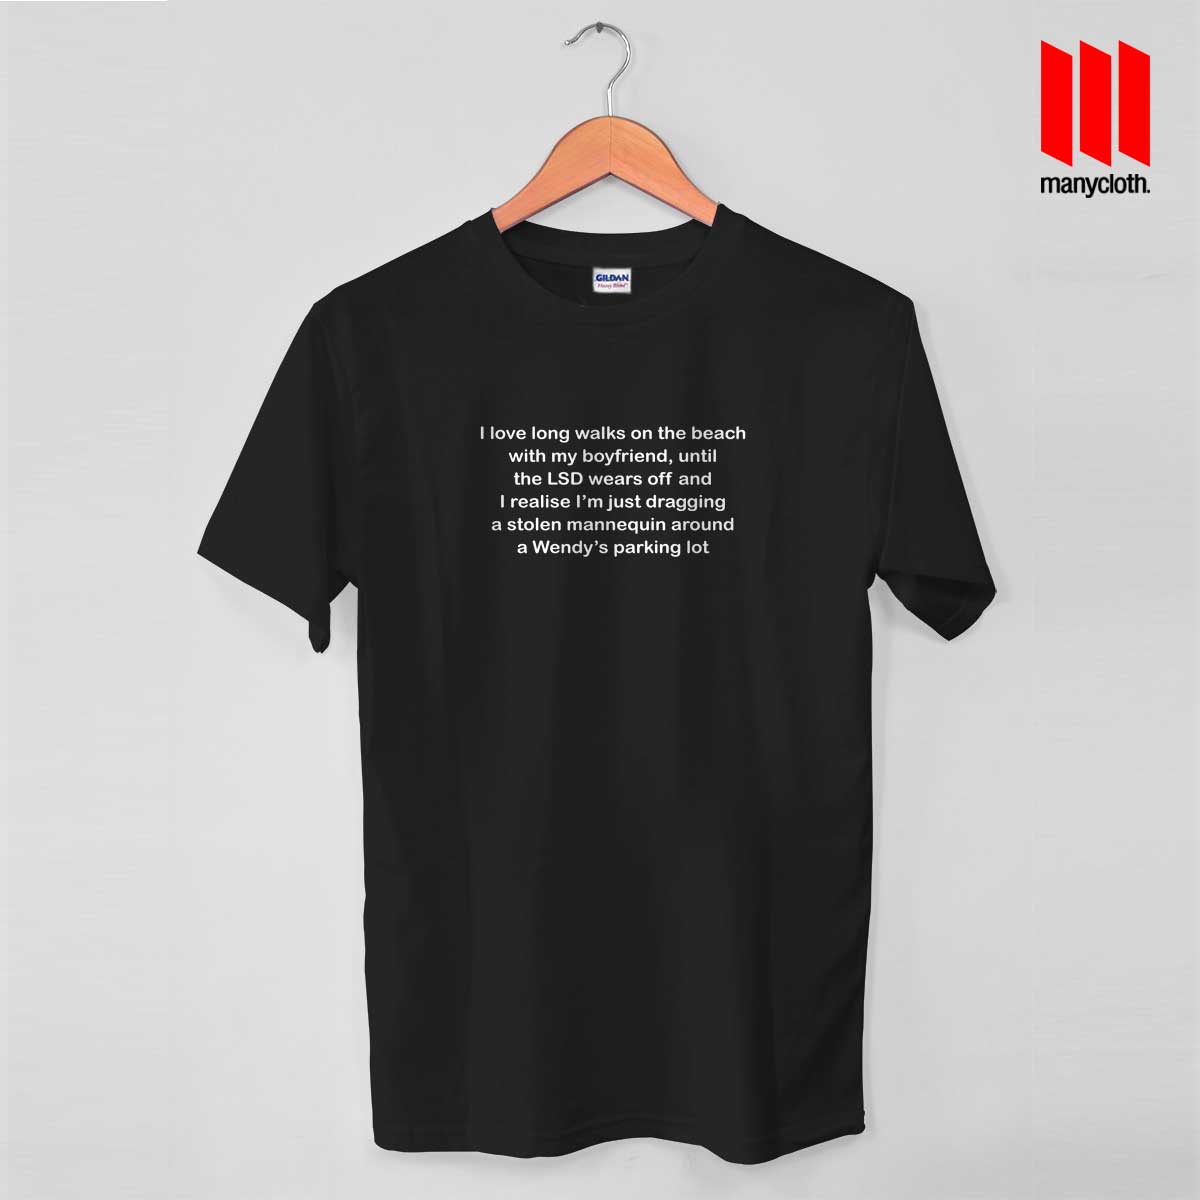 Boyfriends T Shirt - by ManyCloth chep designs.com